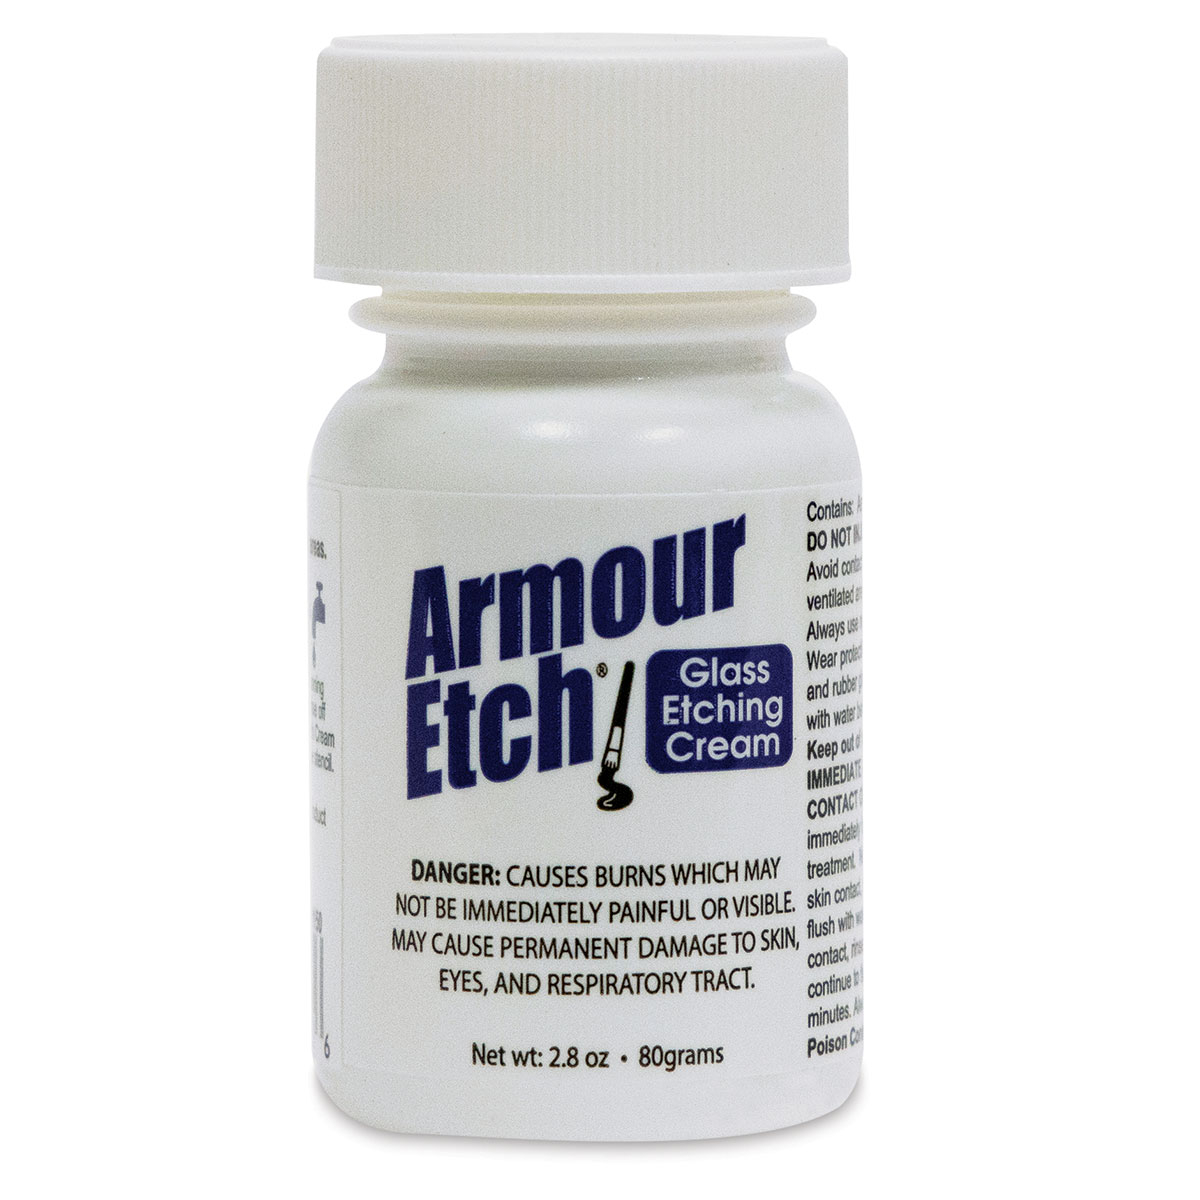 Armour Etch Glass Etching Cream 2.8oz